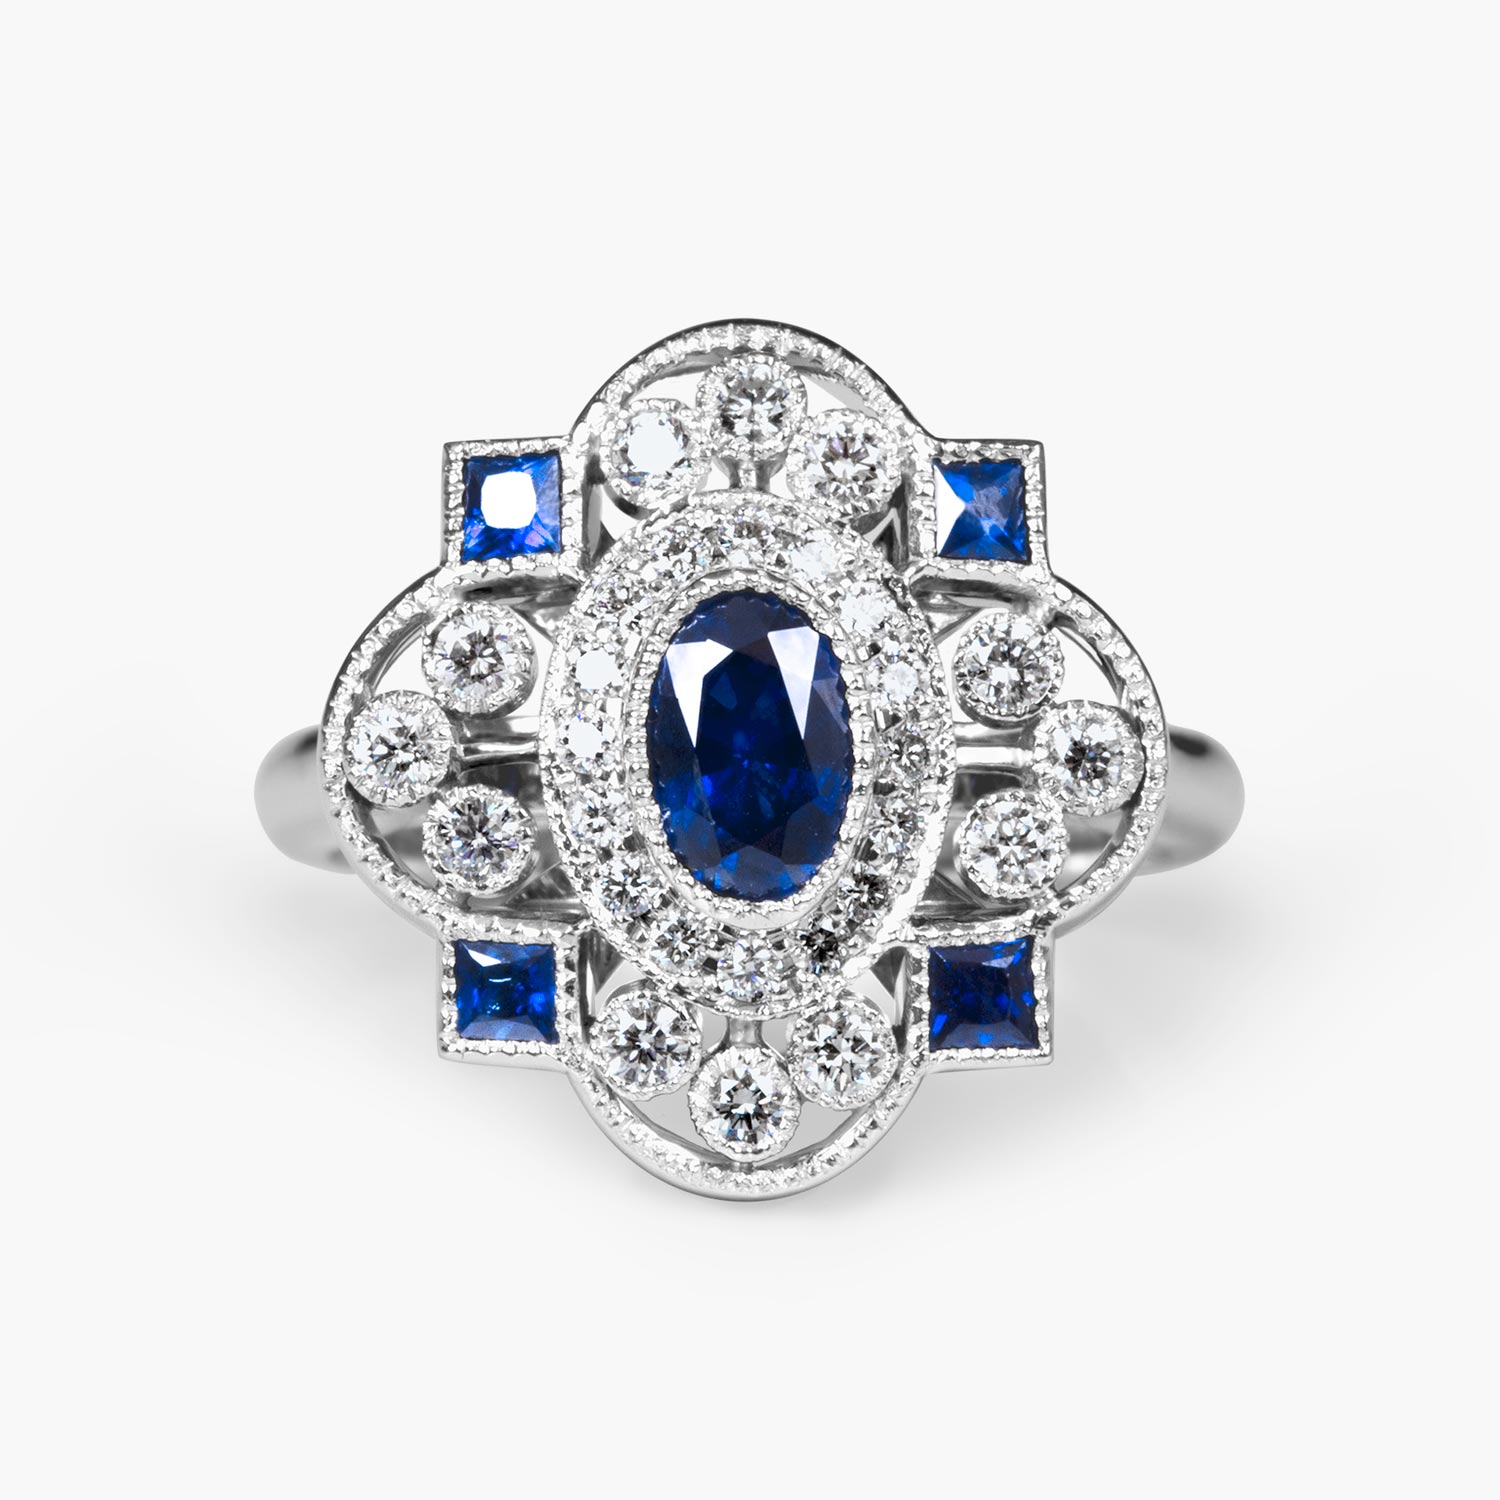 Alex’s Bespoke Diamond and Sapphire Engagement Ring